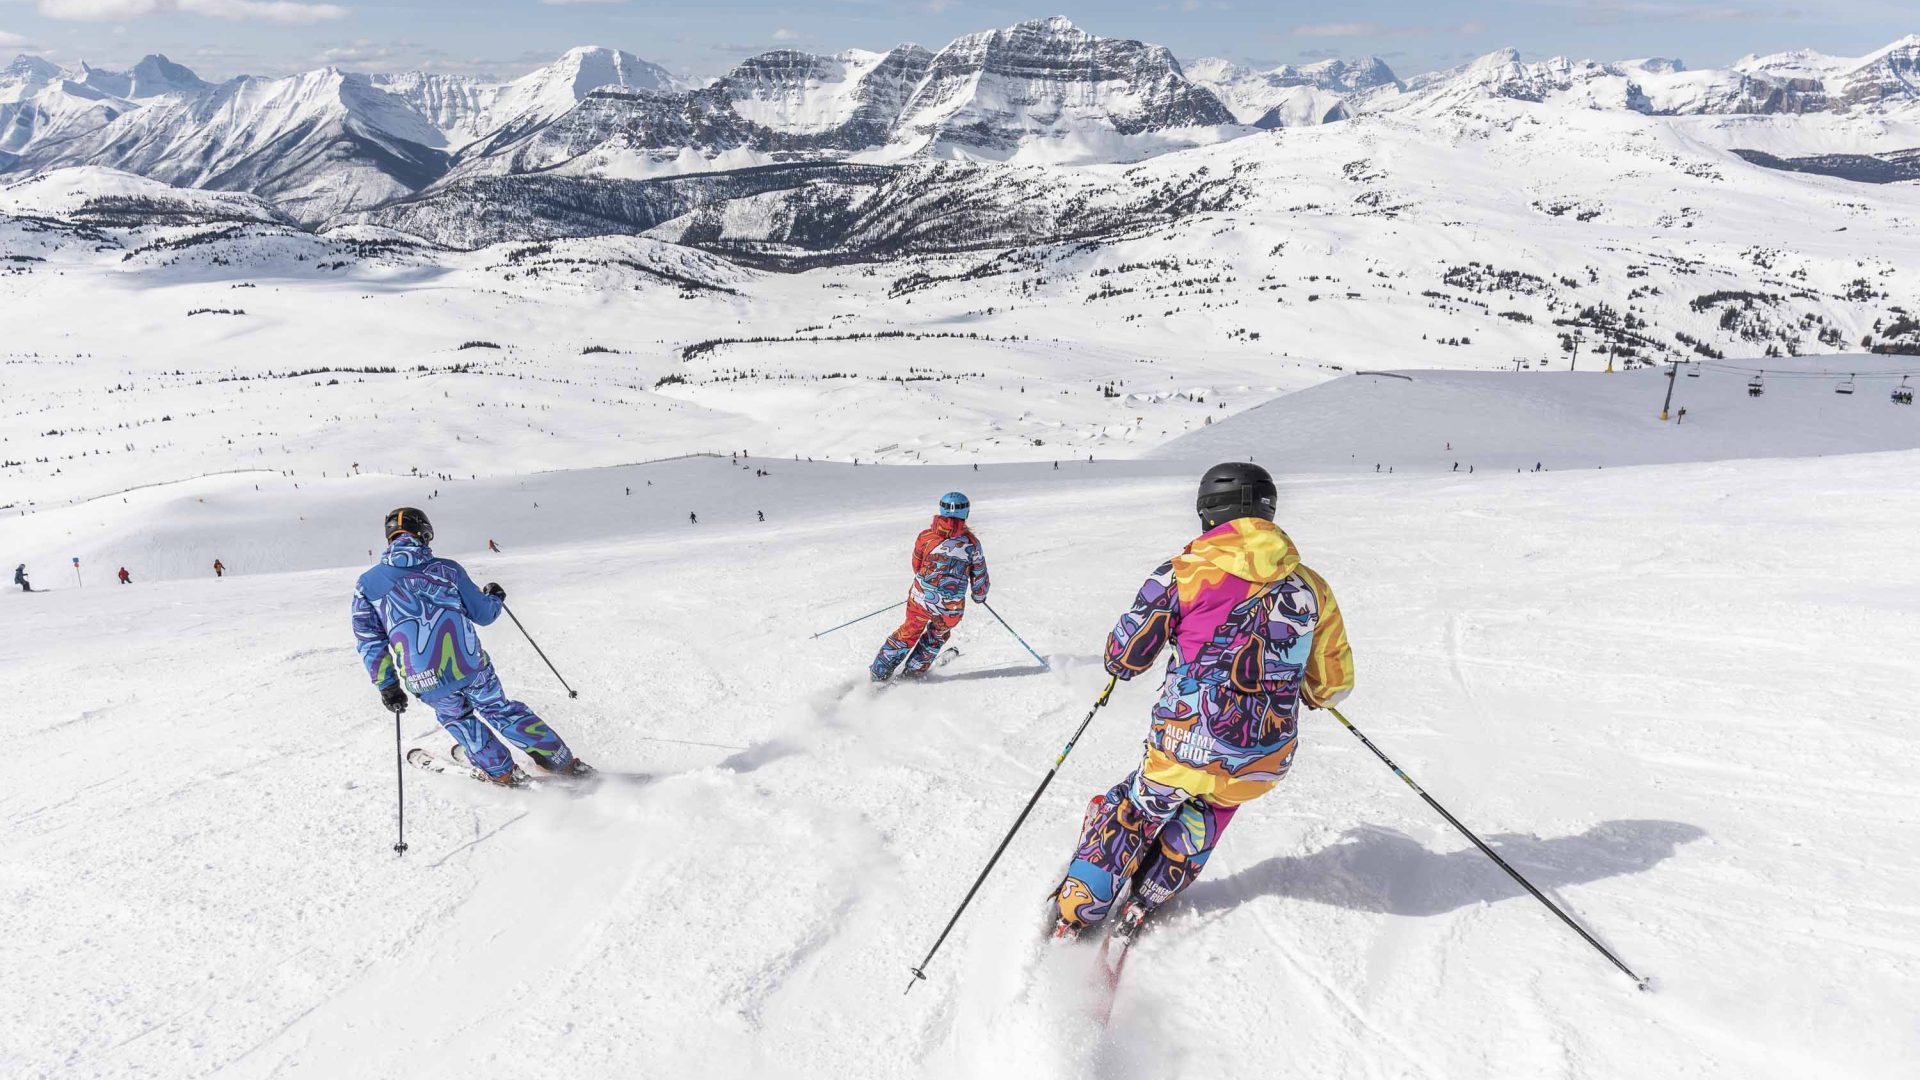 Three skiers ski down a snow covered mountain.